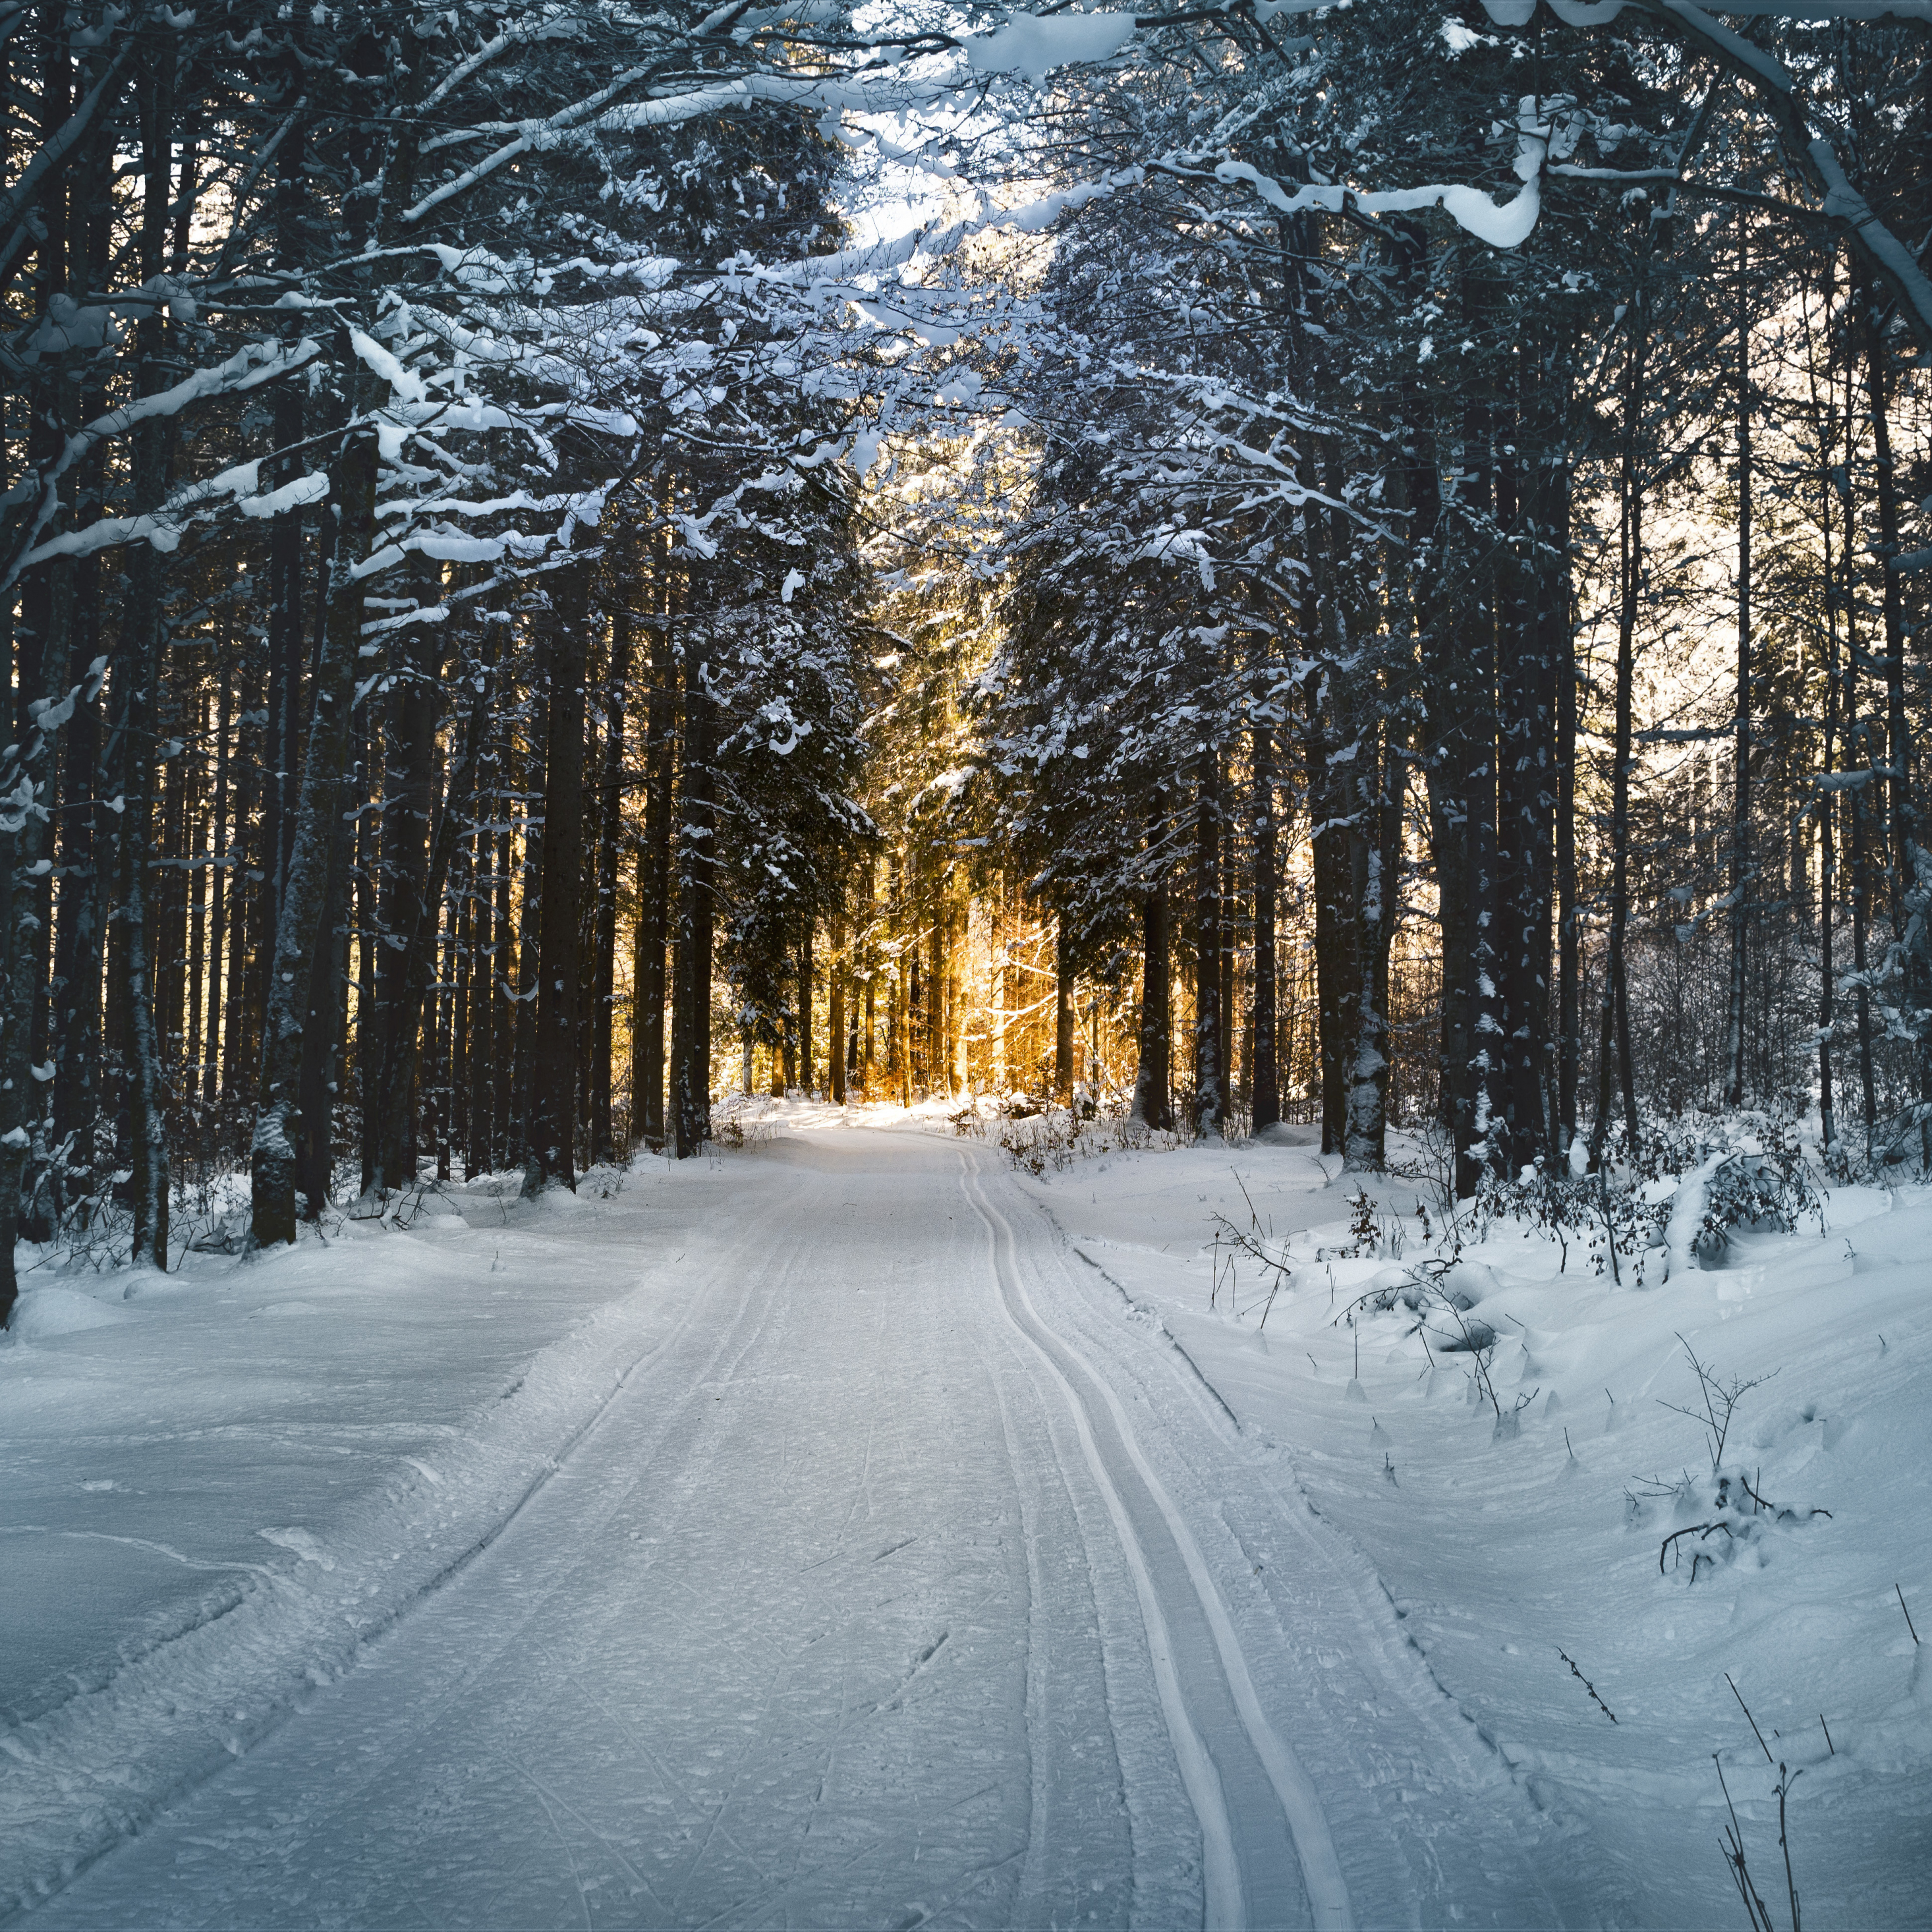 Download wallpaper 2932x2932 winter, snow road, trees, nature, ipad pro retina, 2932x2932 HD background, 956